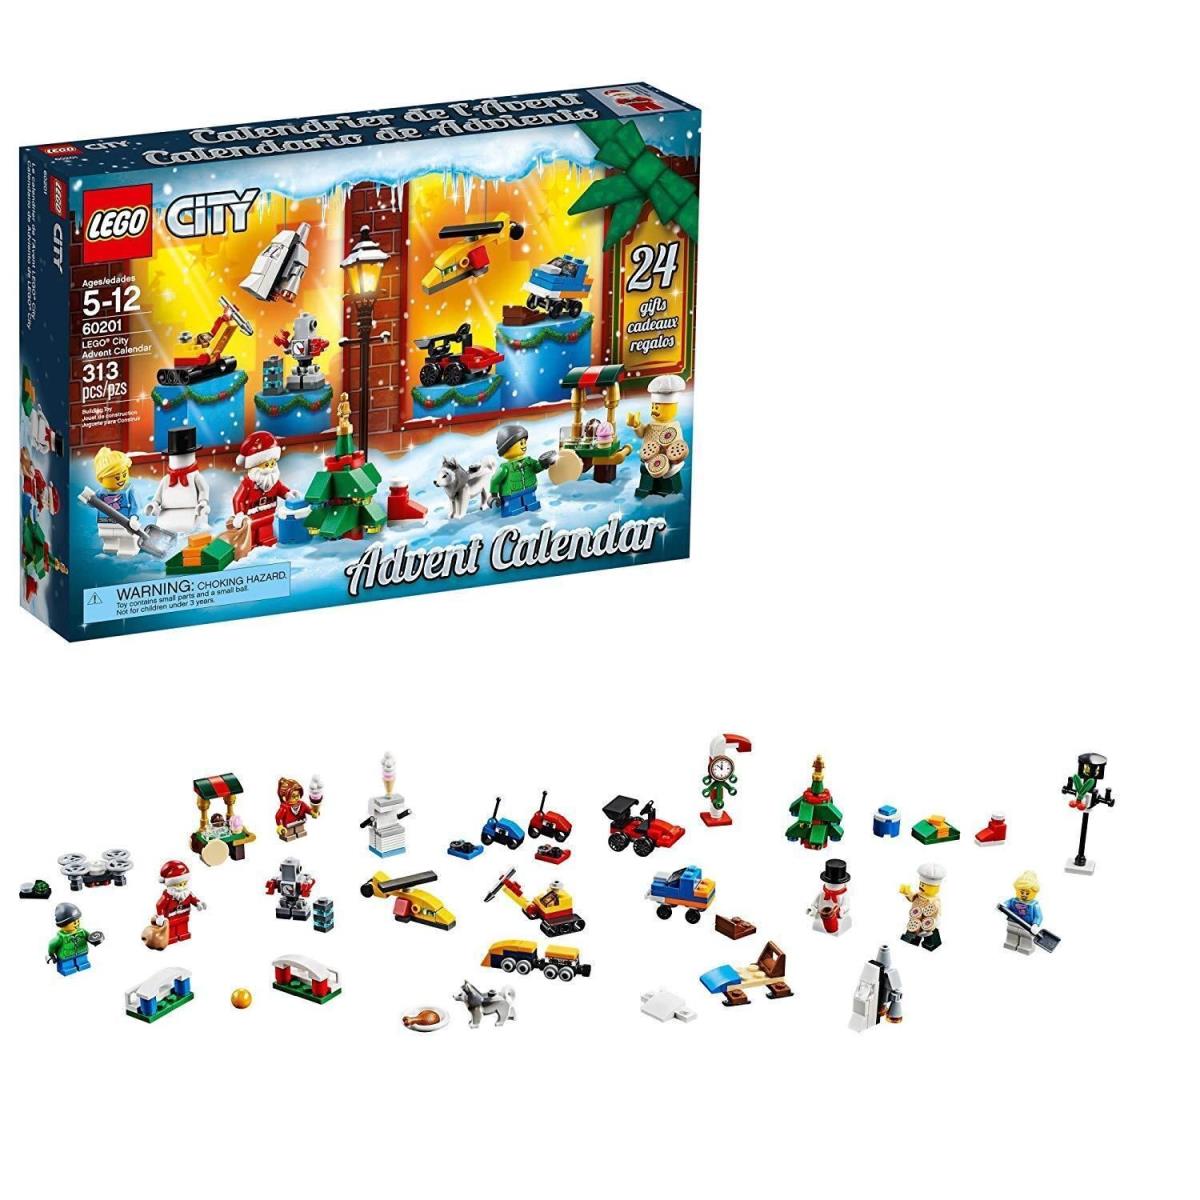 Lego City Advent Calendar Building Kit Christmas 60201 313 Pieces Minifigures